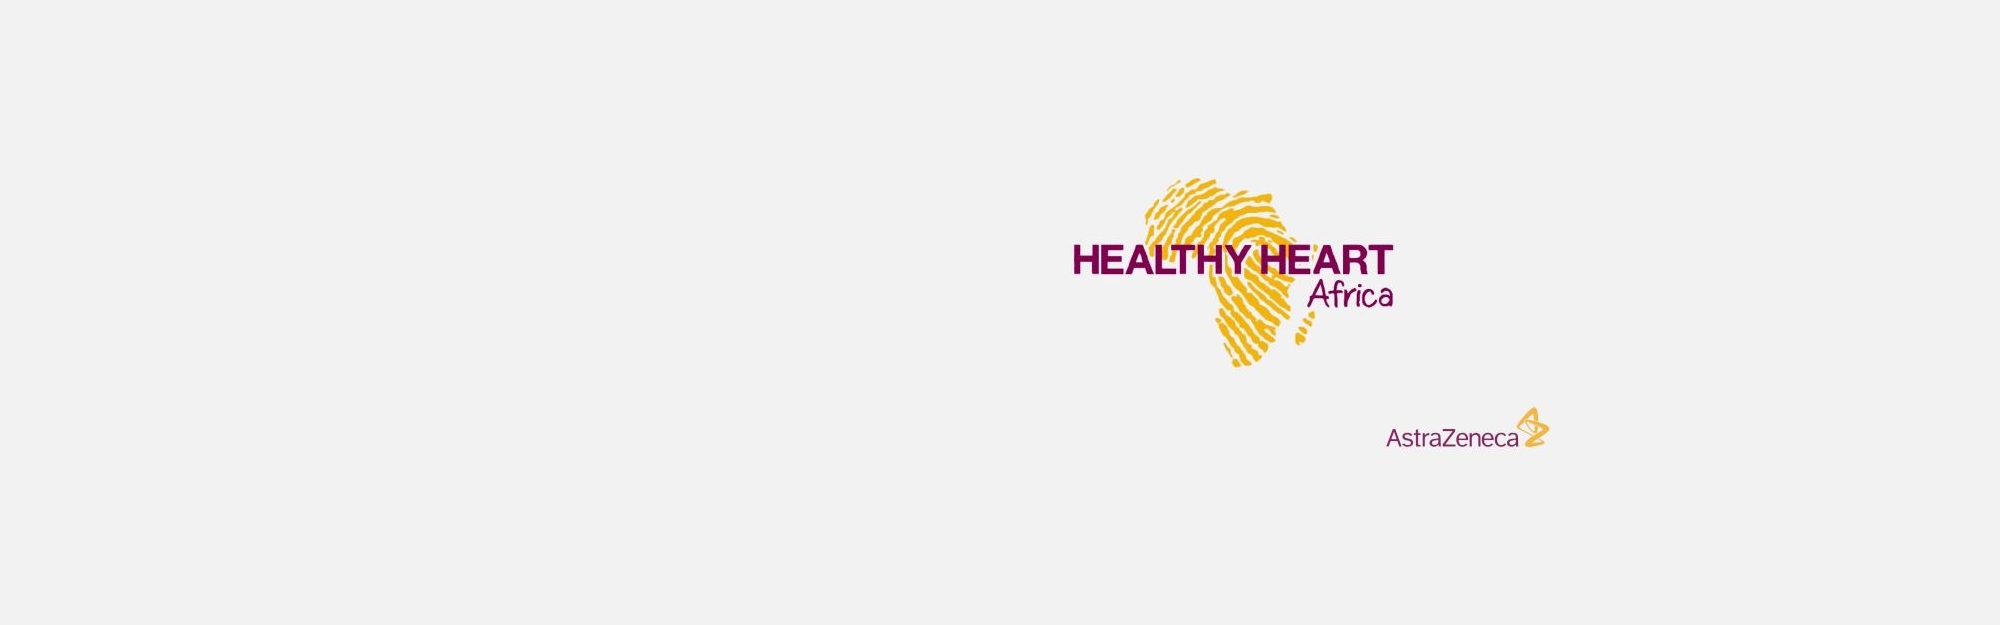 Healthy Heart Africa logo